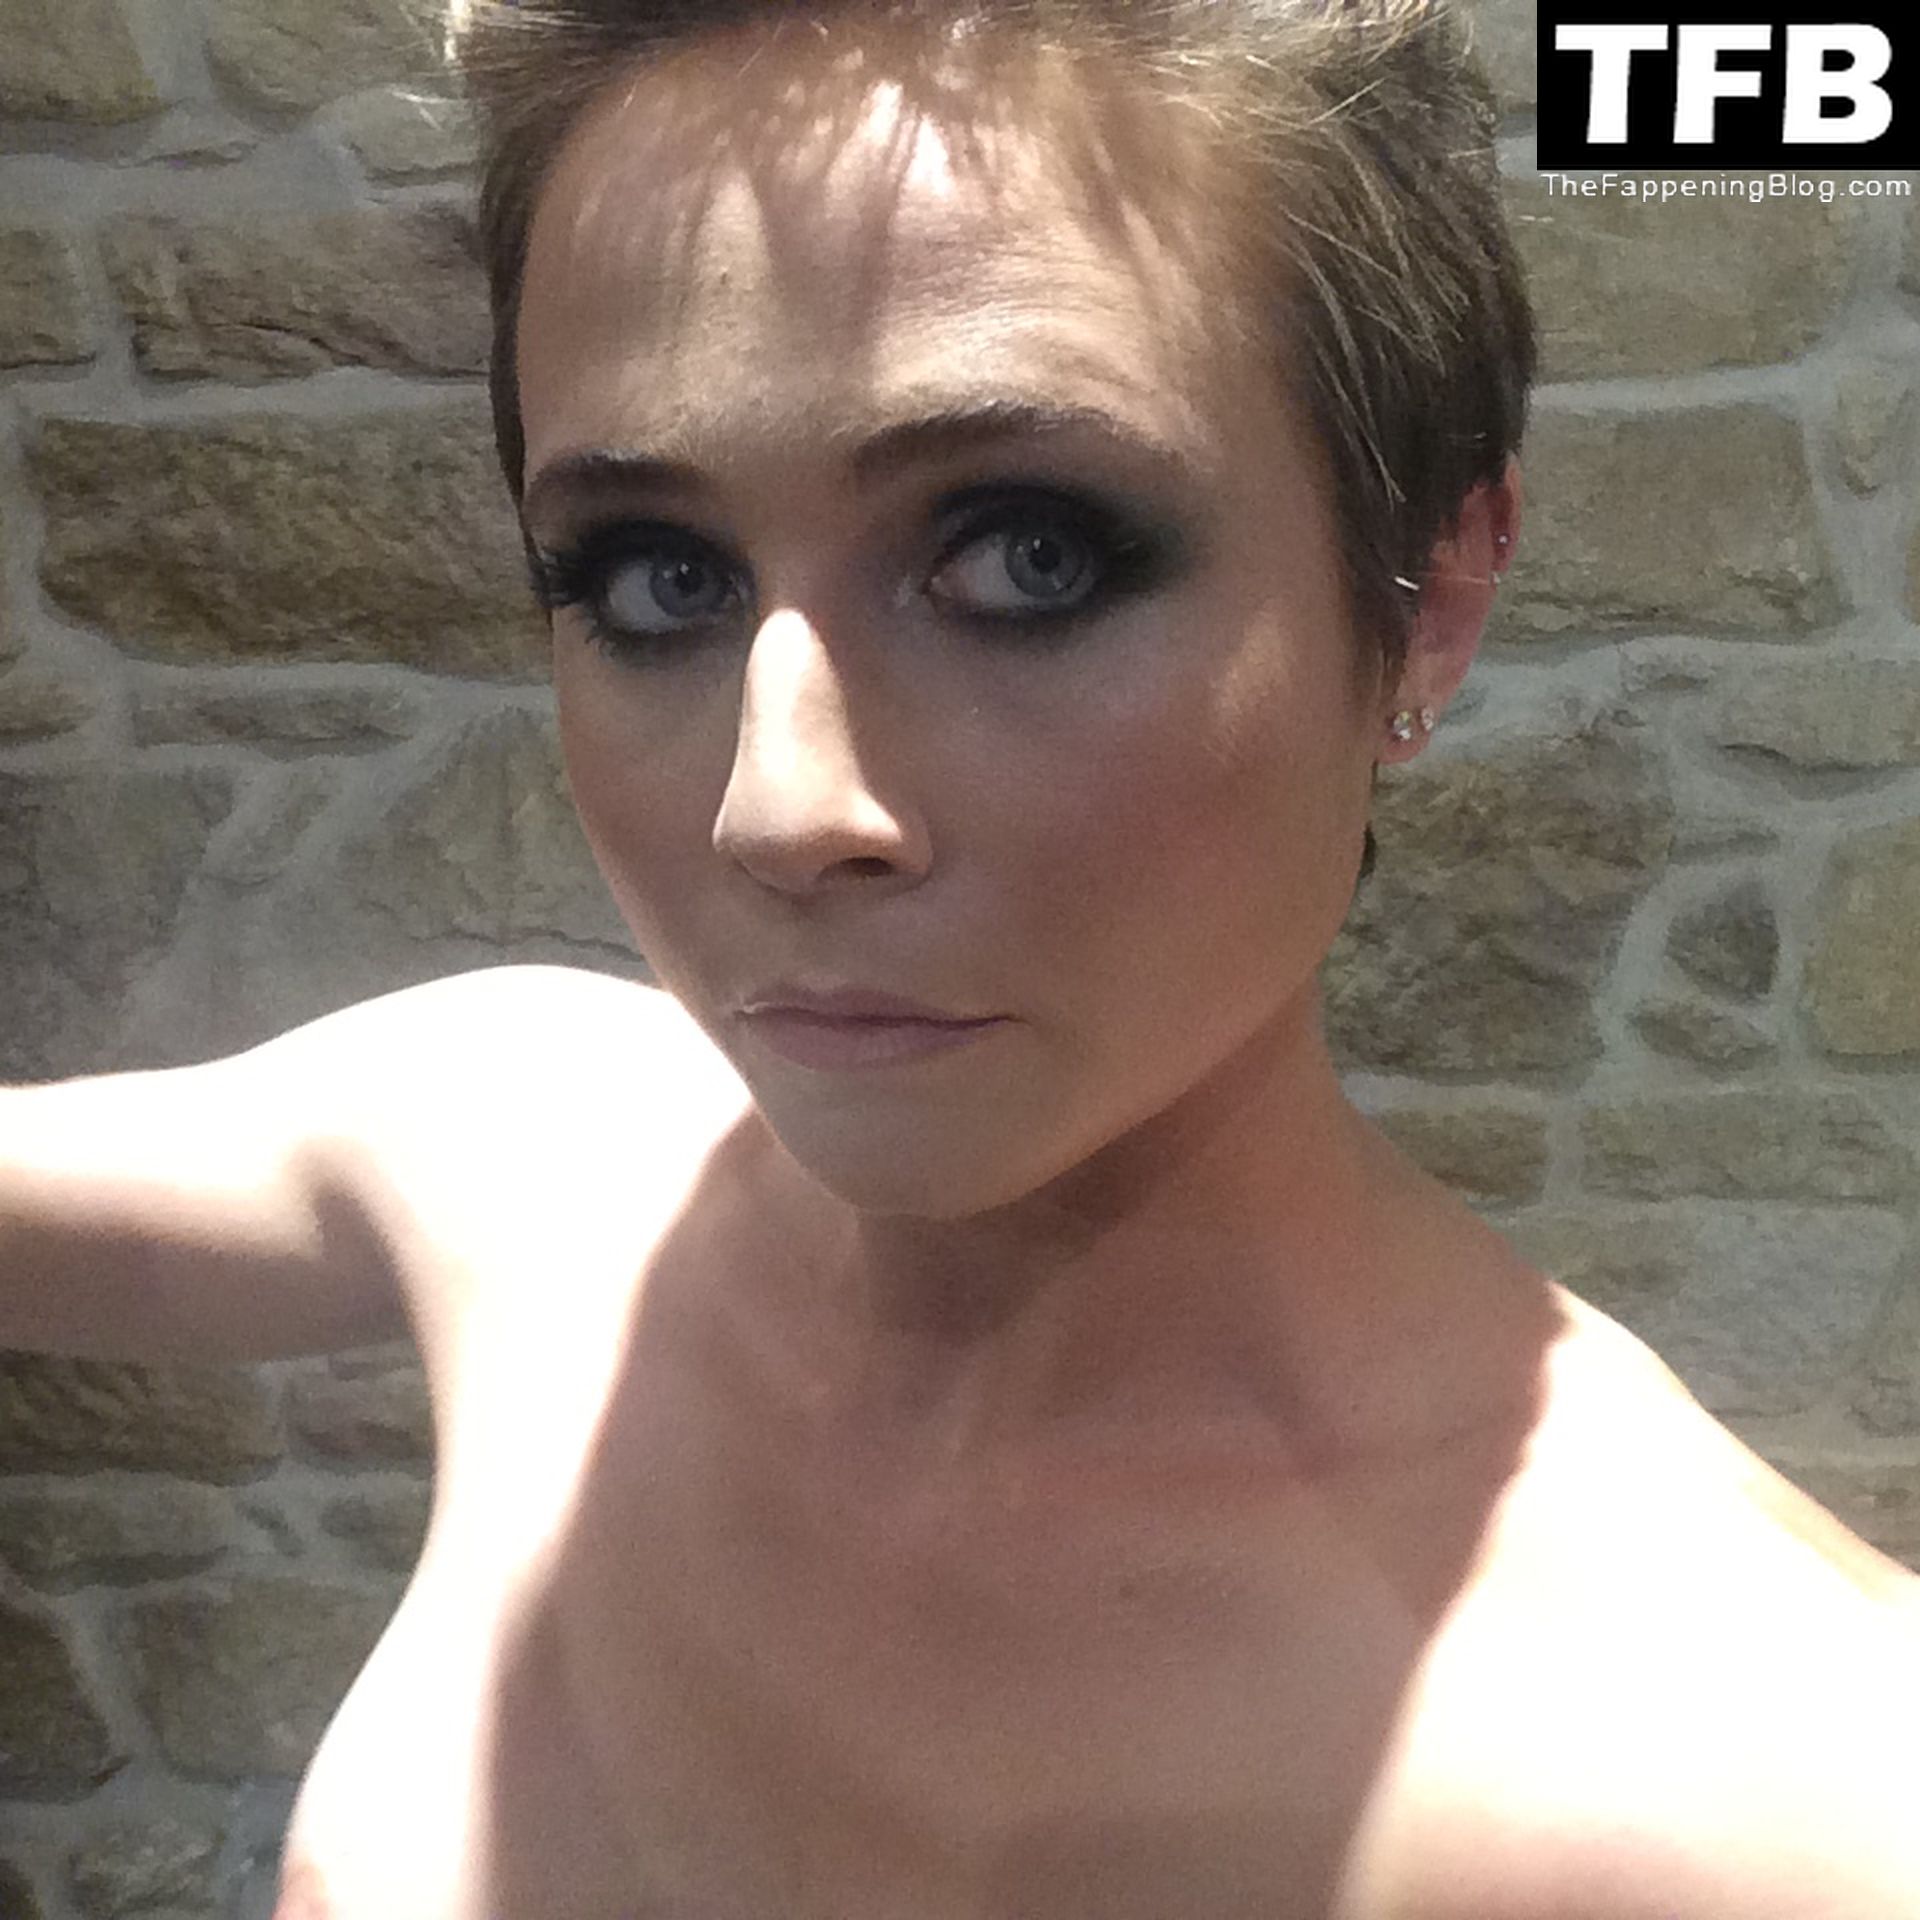 Tessa-James-Nude-Leaked-The-Fappening-Blog-4.jpg